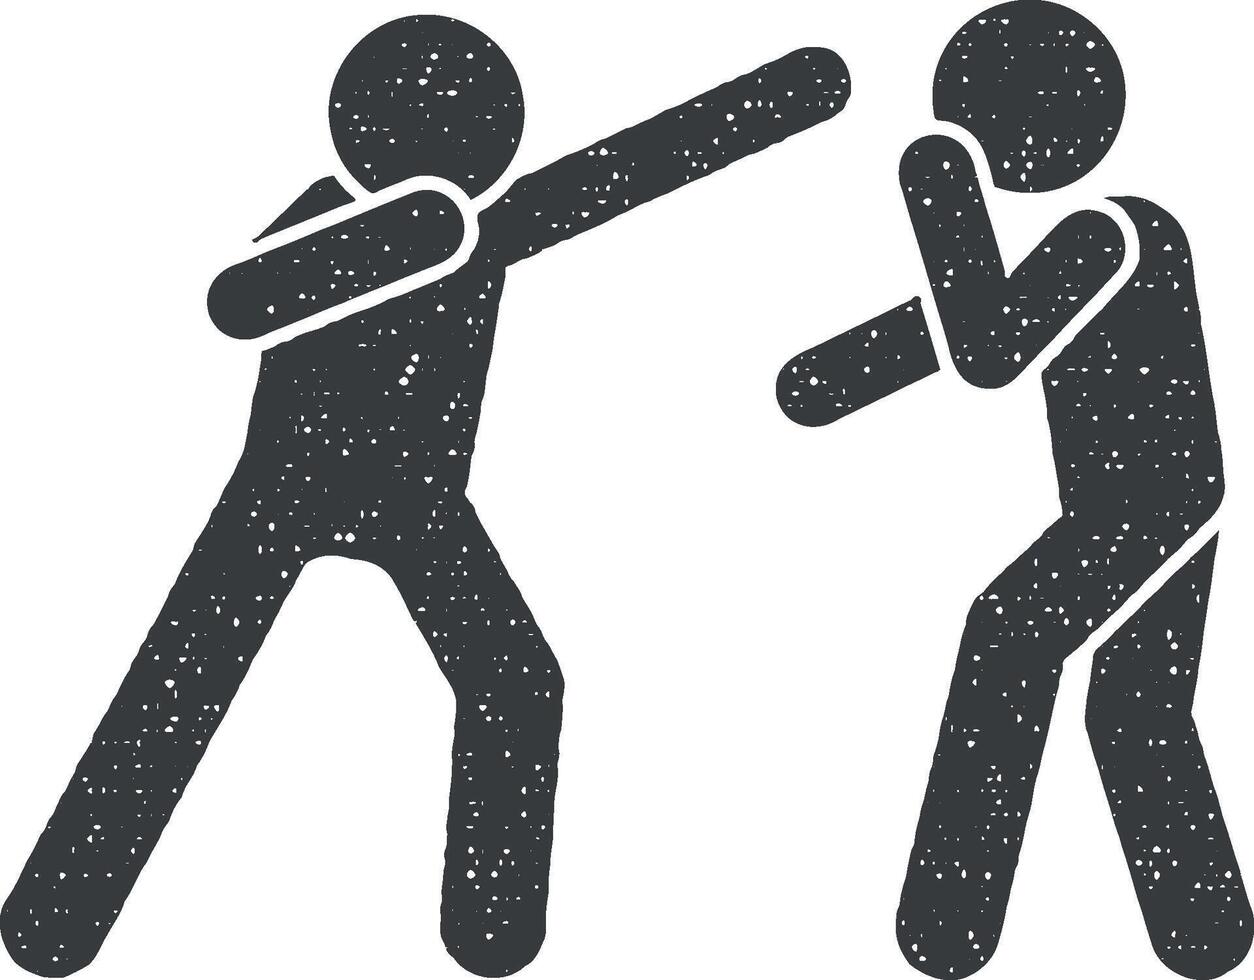 Karate men kick icon vector illustration in stamp style